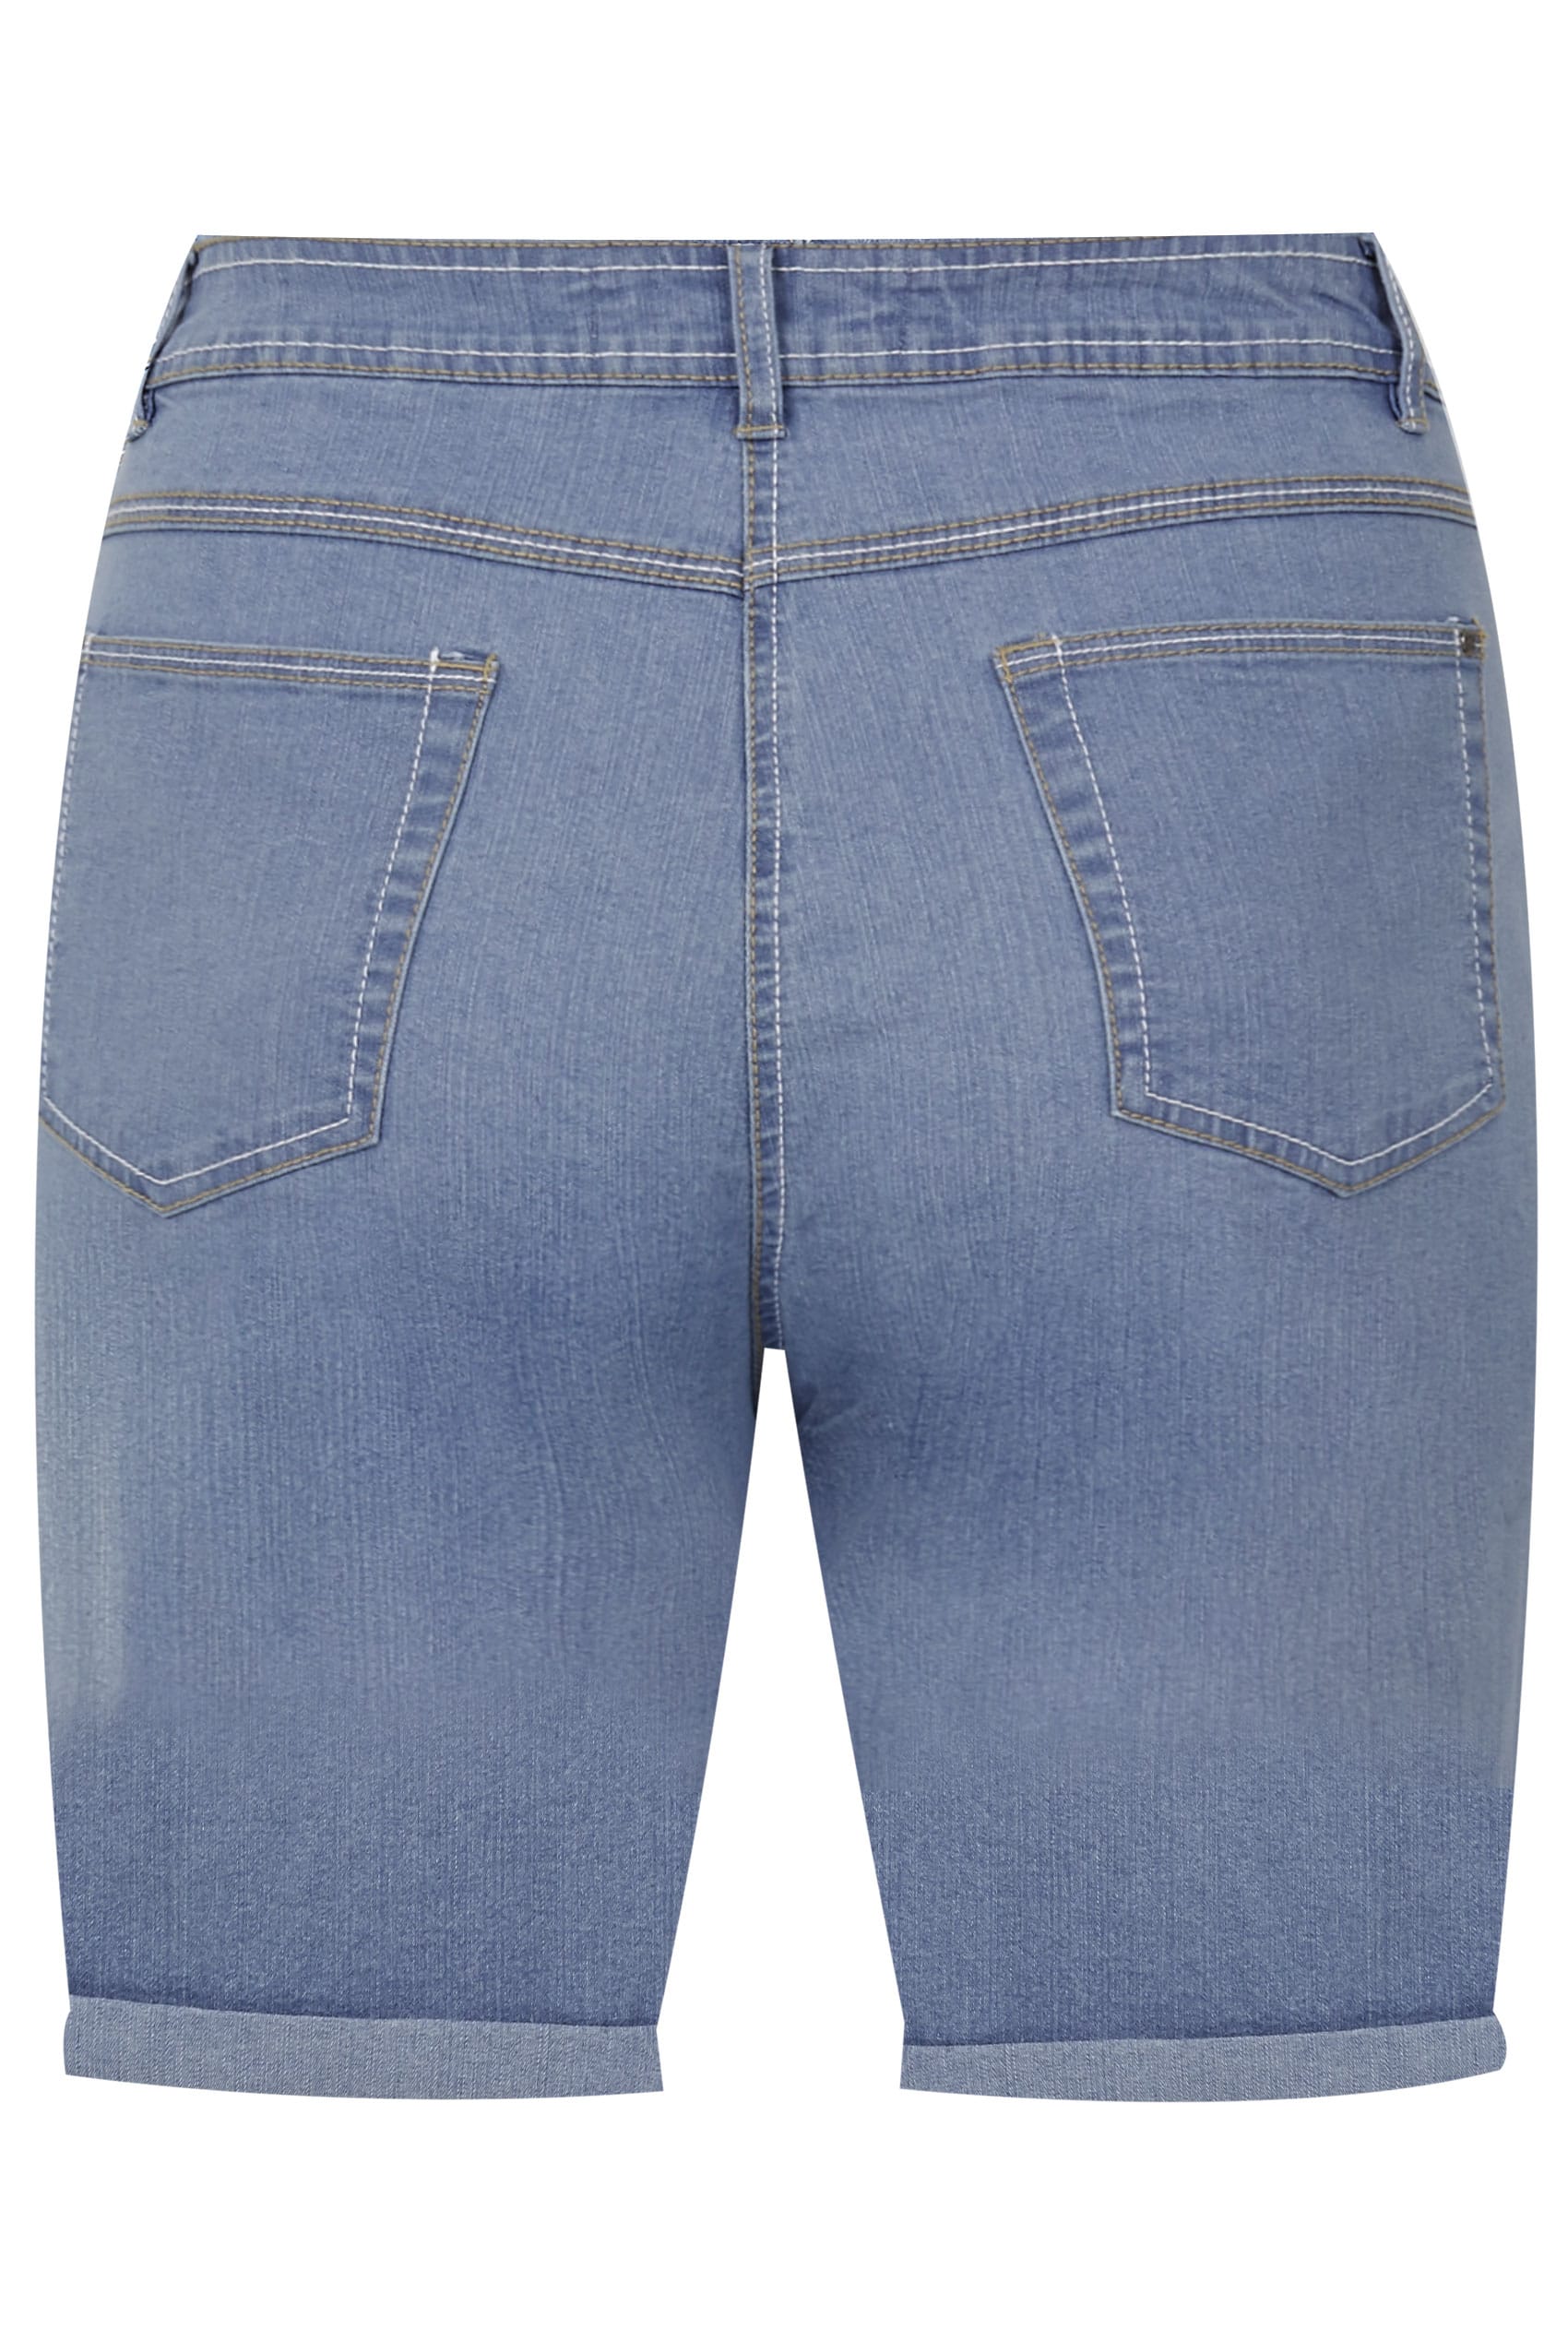 Light Blue Washed Knee Length Shorts, plus size 16 to 36